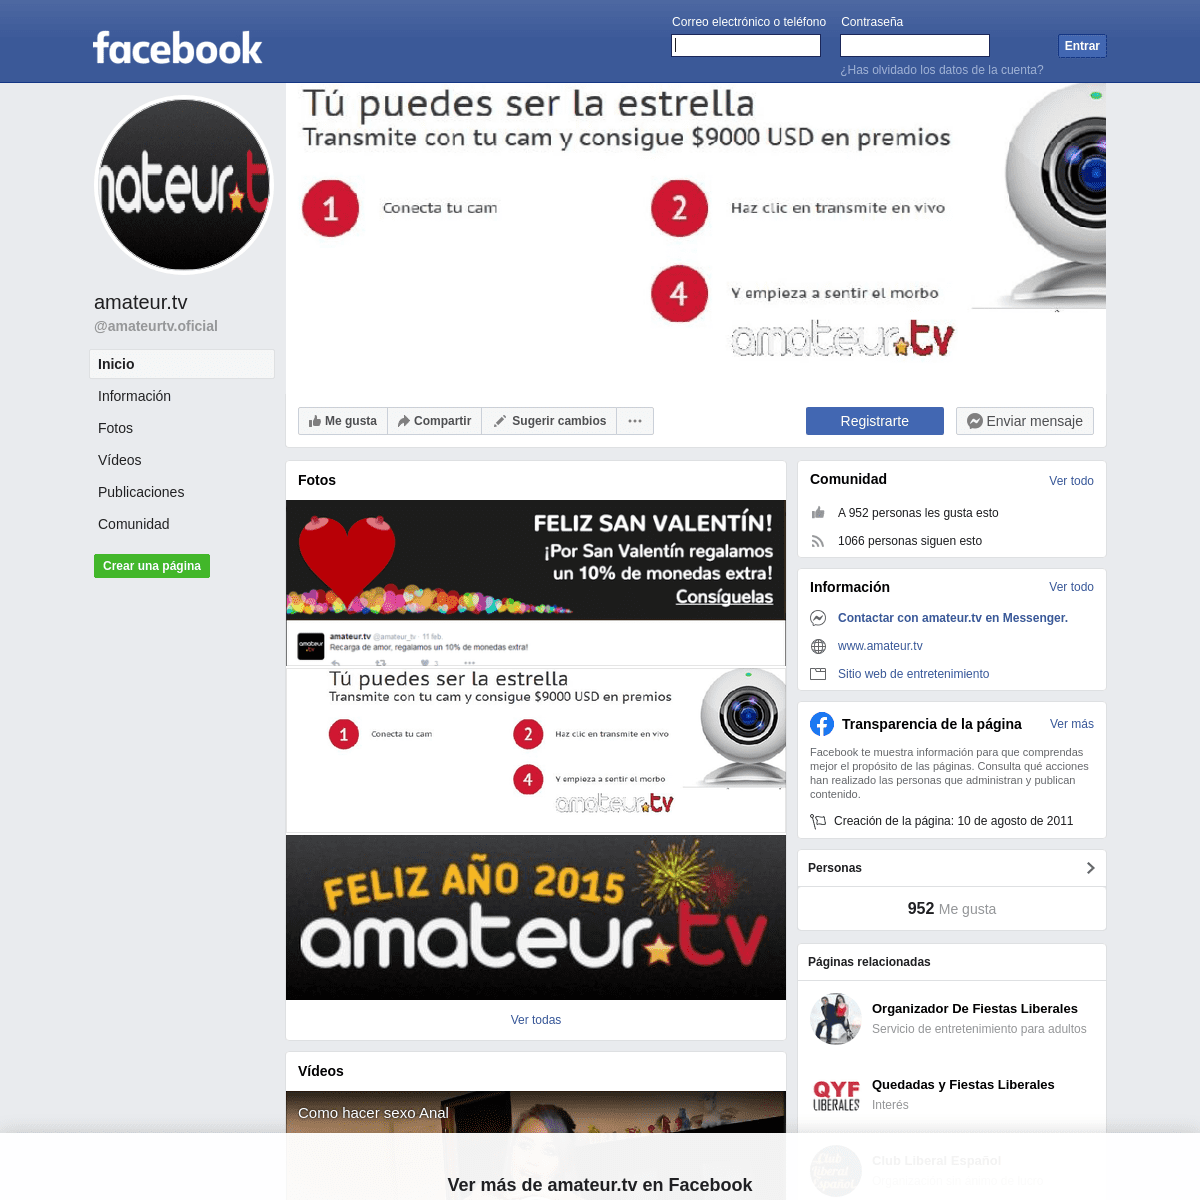 A complete backup of https://es-es.facebook.com/amateurtv.oficial/